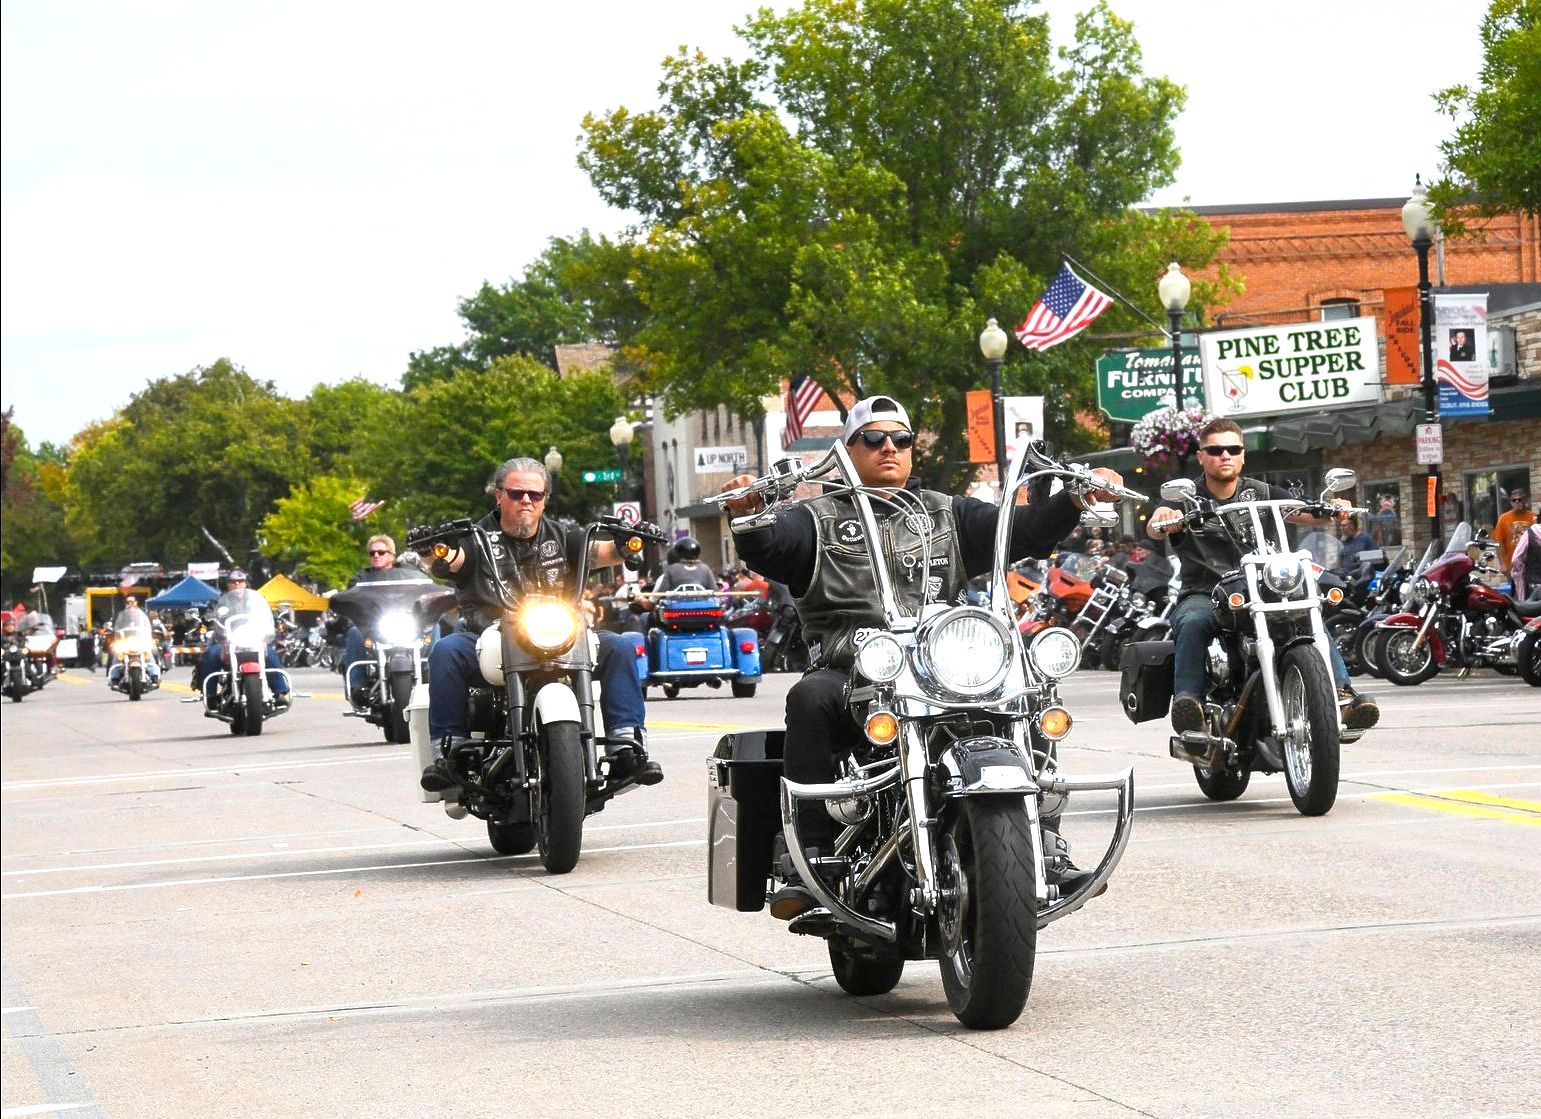 
World's Biggest Motorcycle Event, world record in Sturgis, South Dakota
